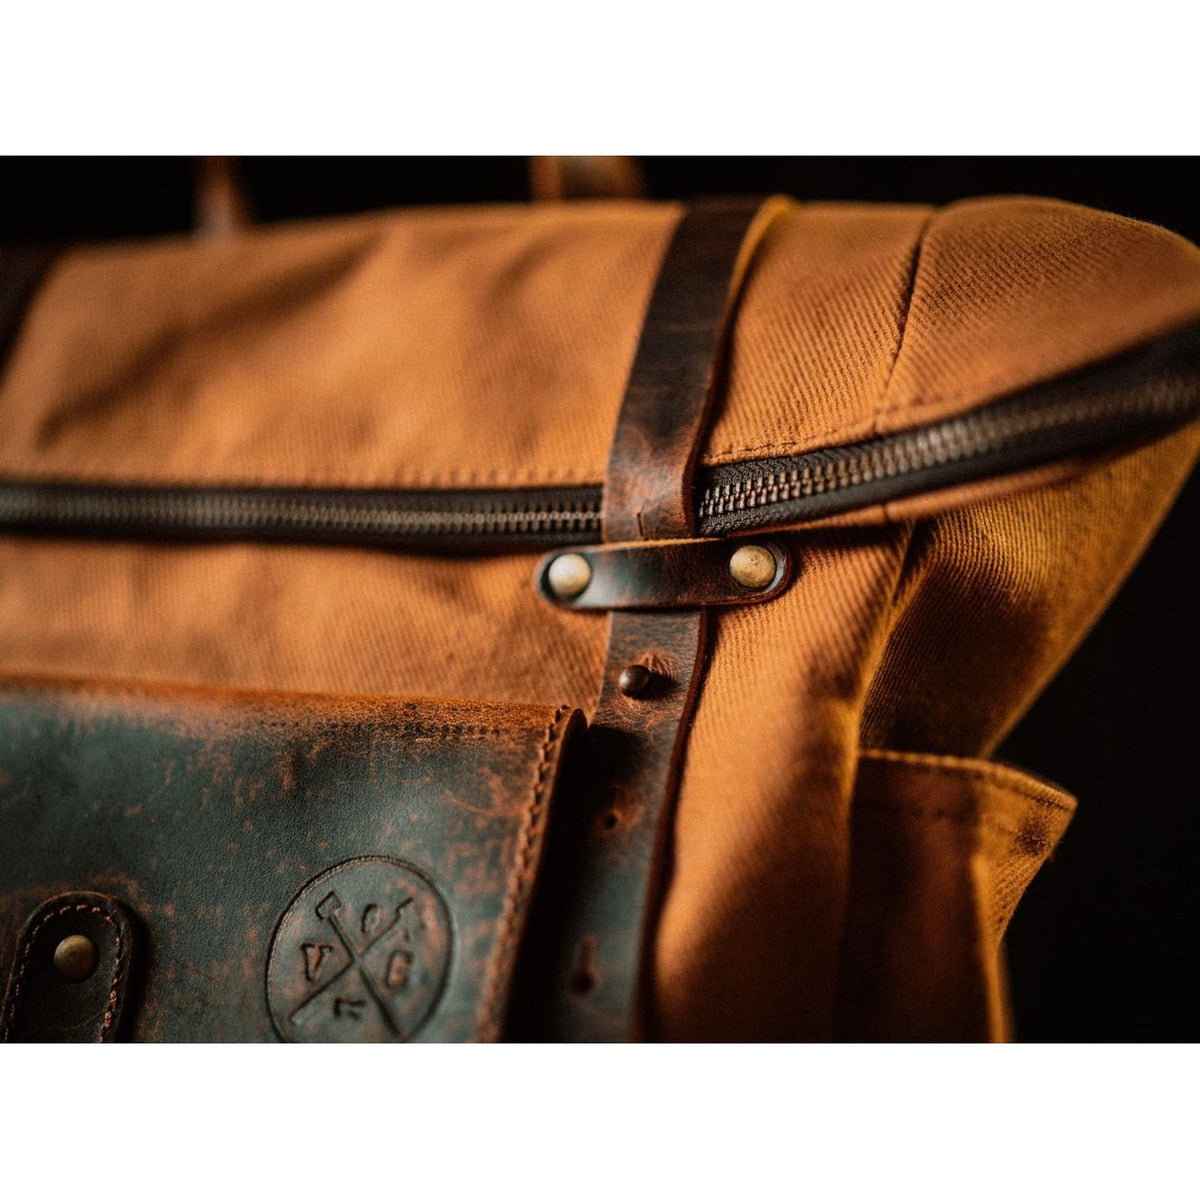 The “Jackson” Backpack by Vintage Gentlemen